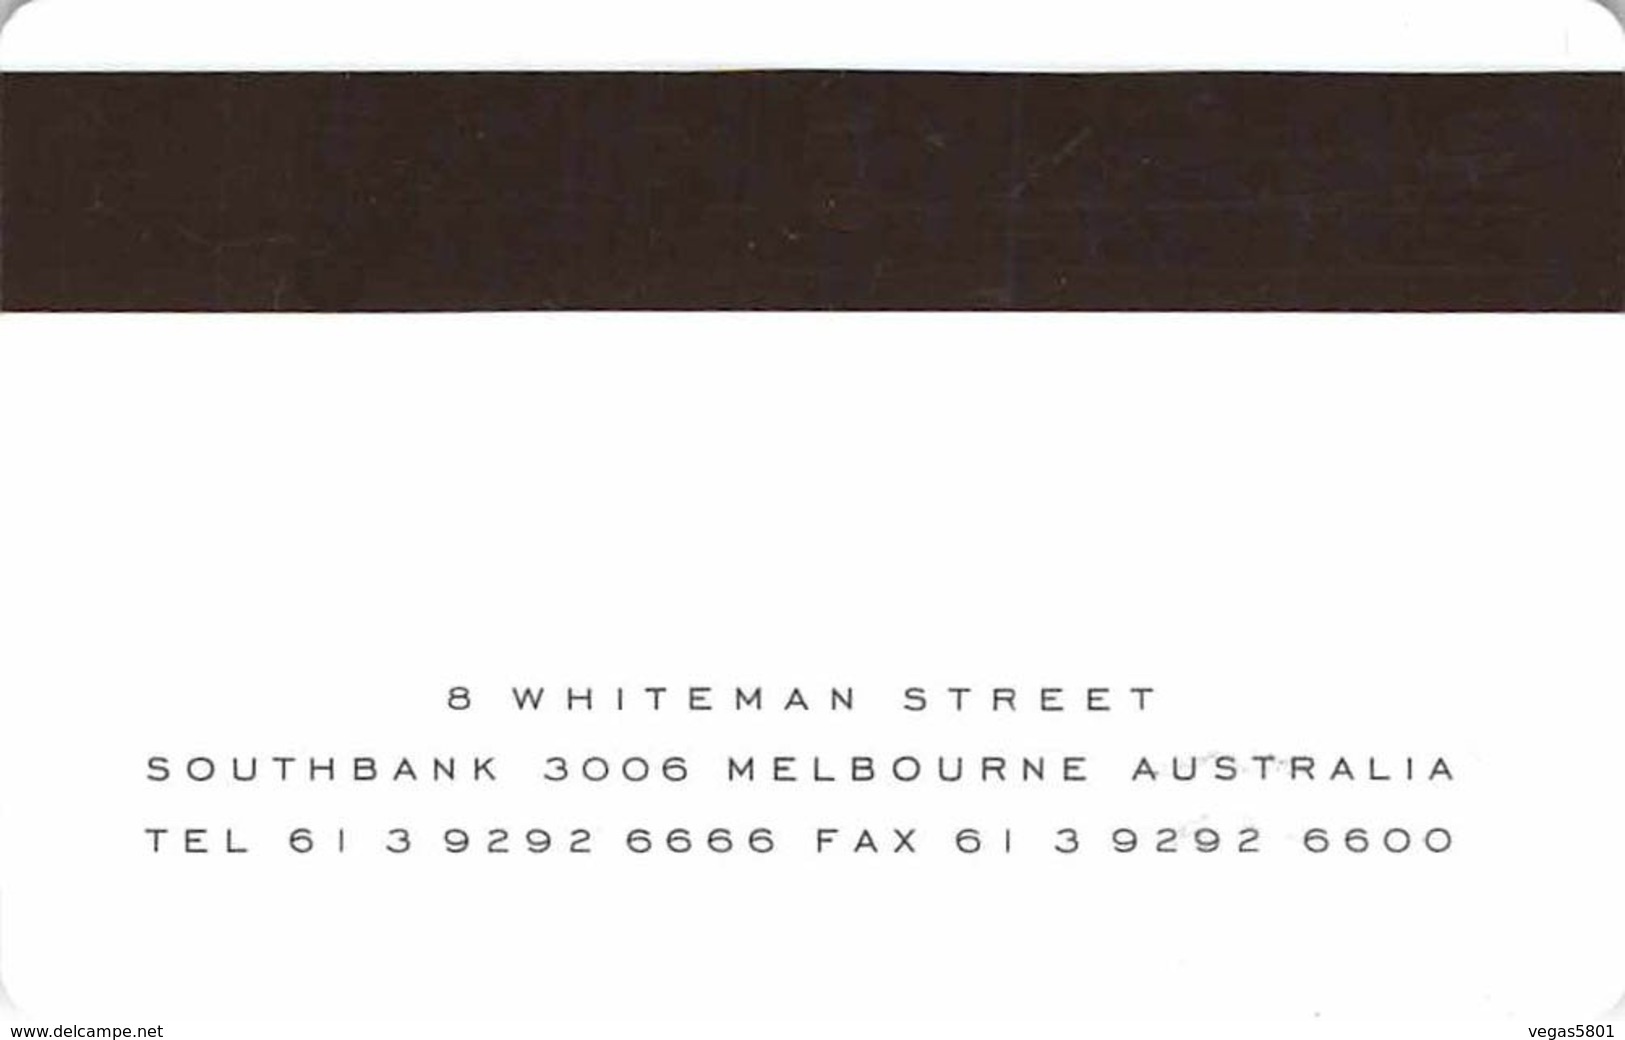 CROWN TOWERS - Melbourne, Australia - Hotel Room Key Card, Hotelkarte, Schlüsselkarte, Clé De L'Hôtel - Hotelkarten